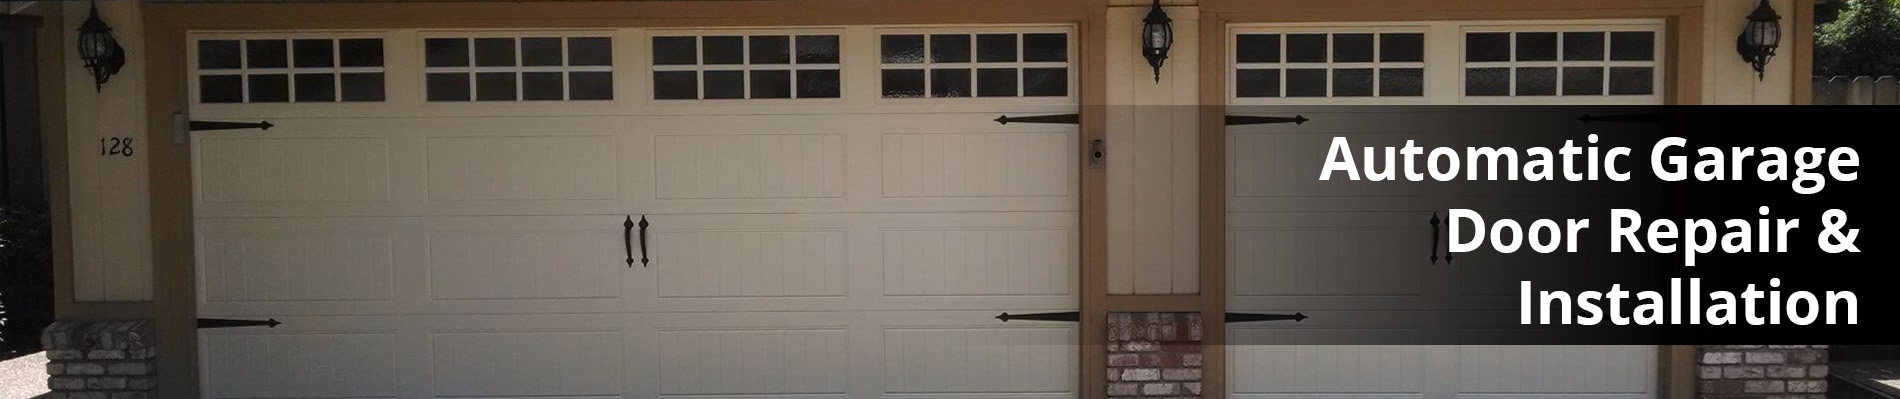 Automatic Garage Door Repair and Installation